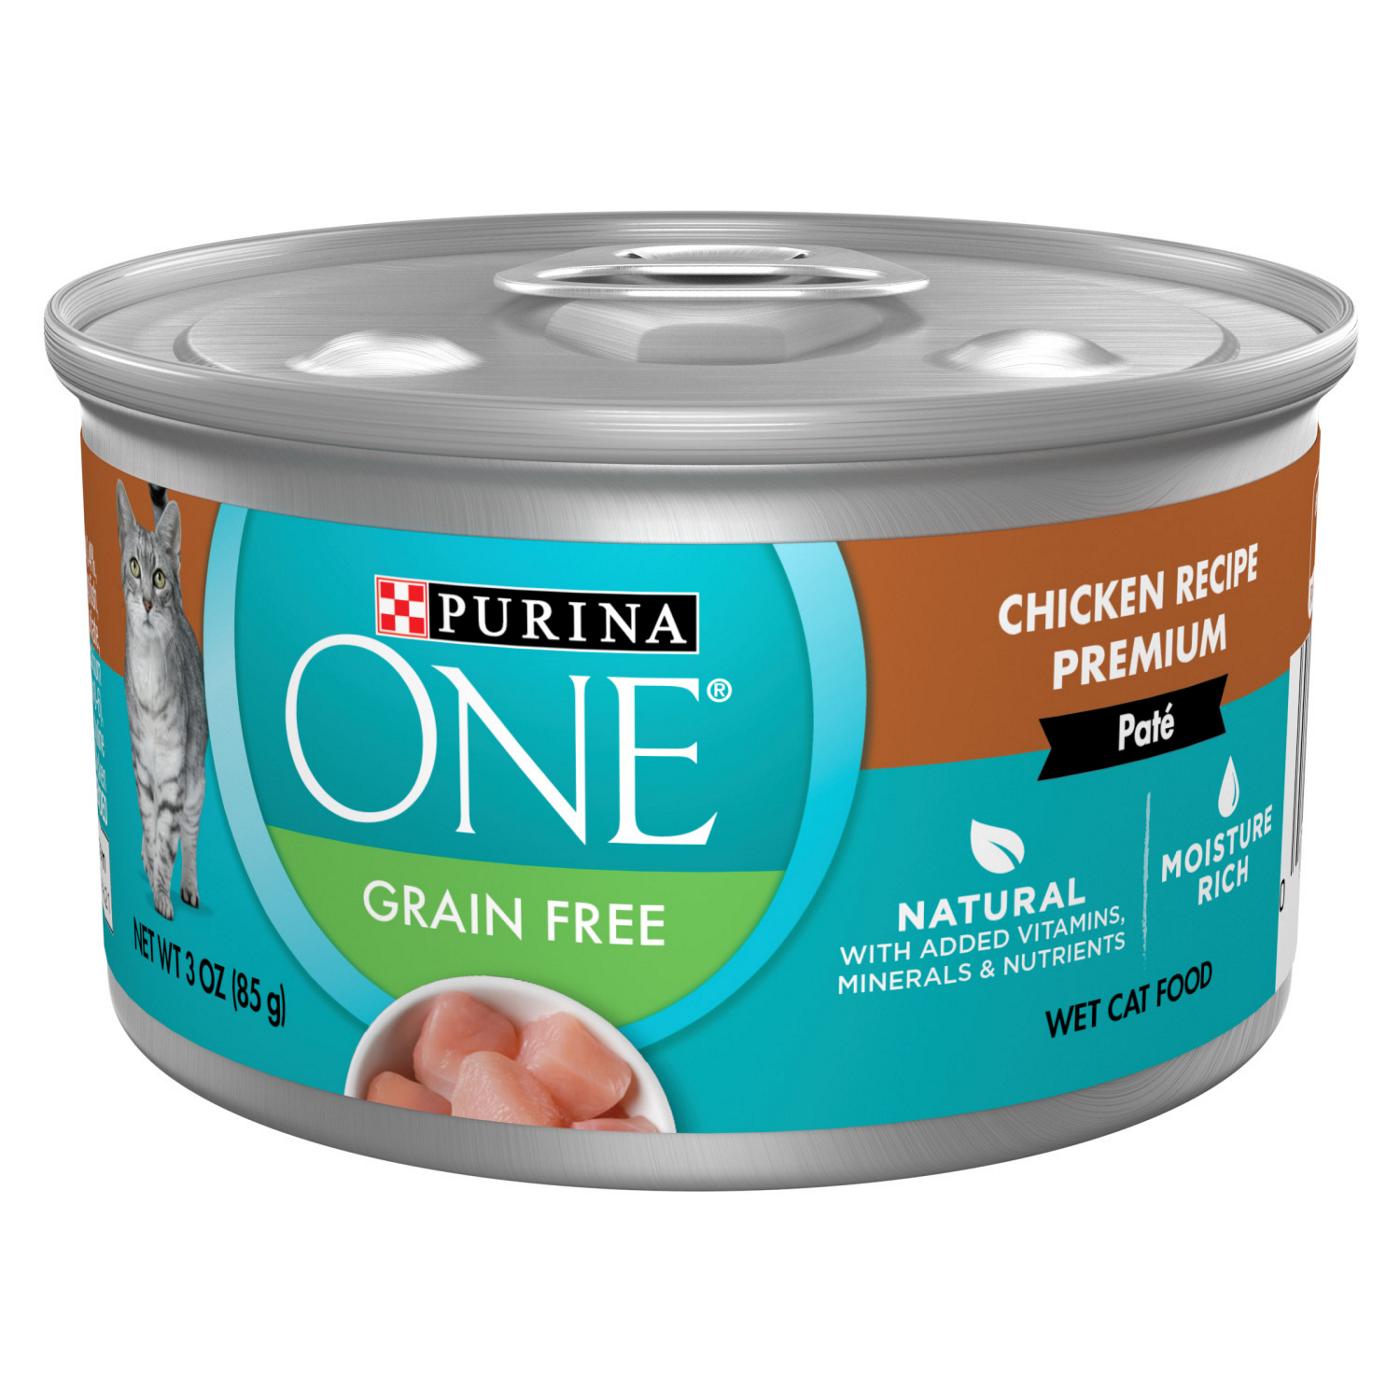 Purina ONE Grain Free Chicken Recipe Premium Pate Cat Food; image 1 of 6